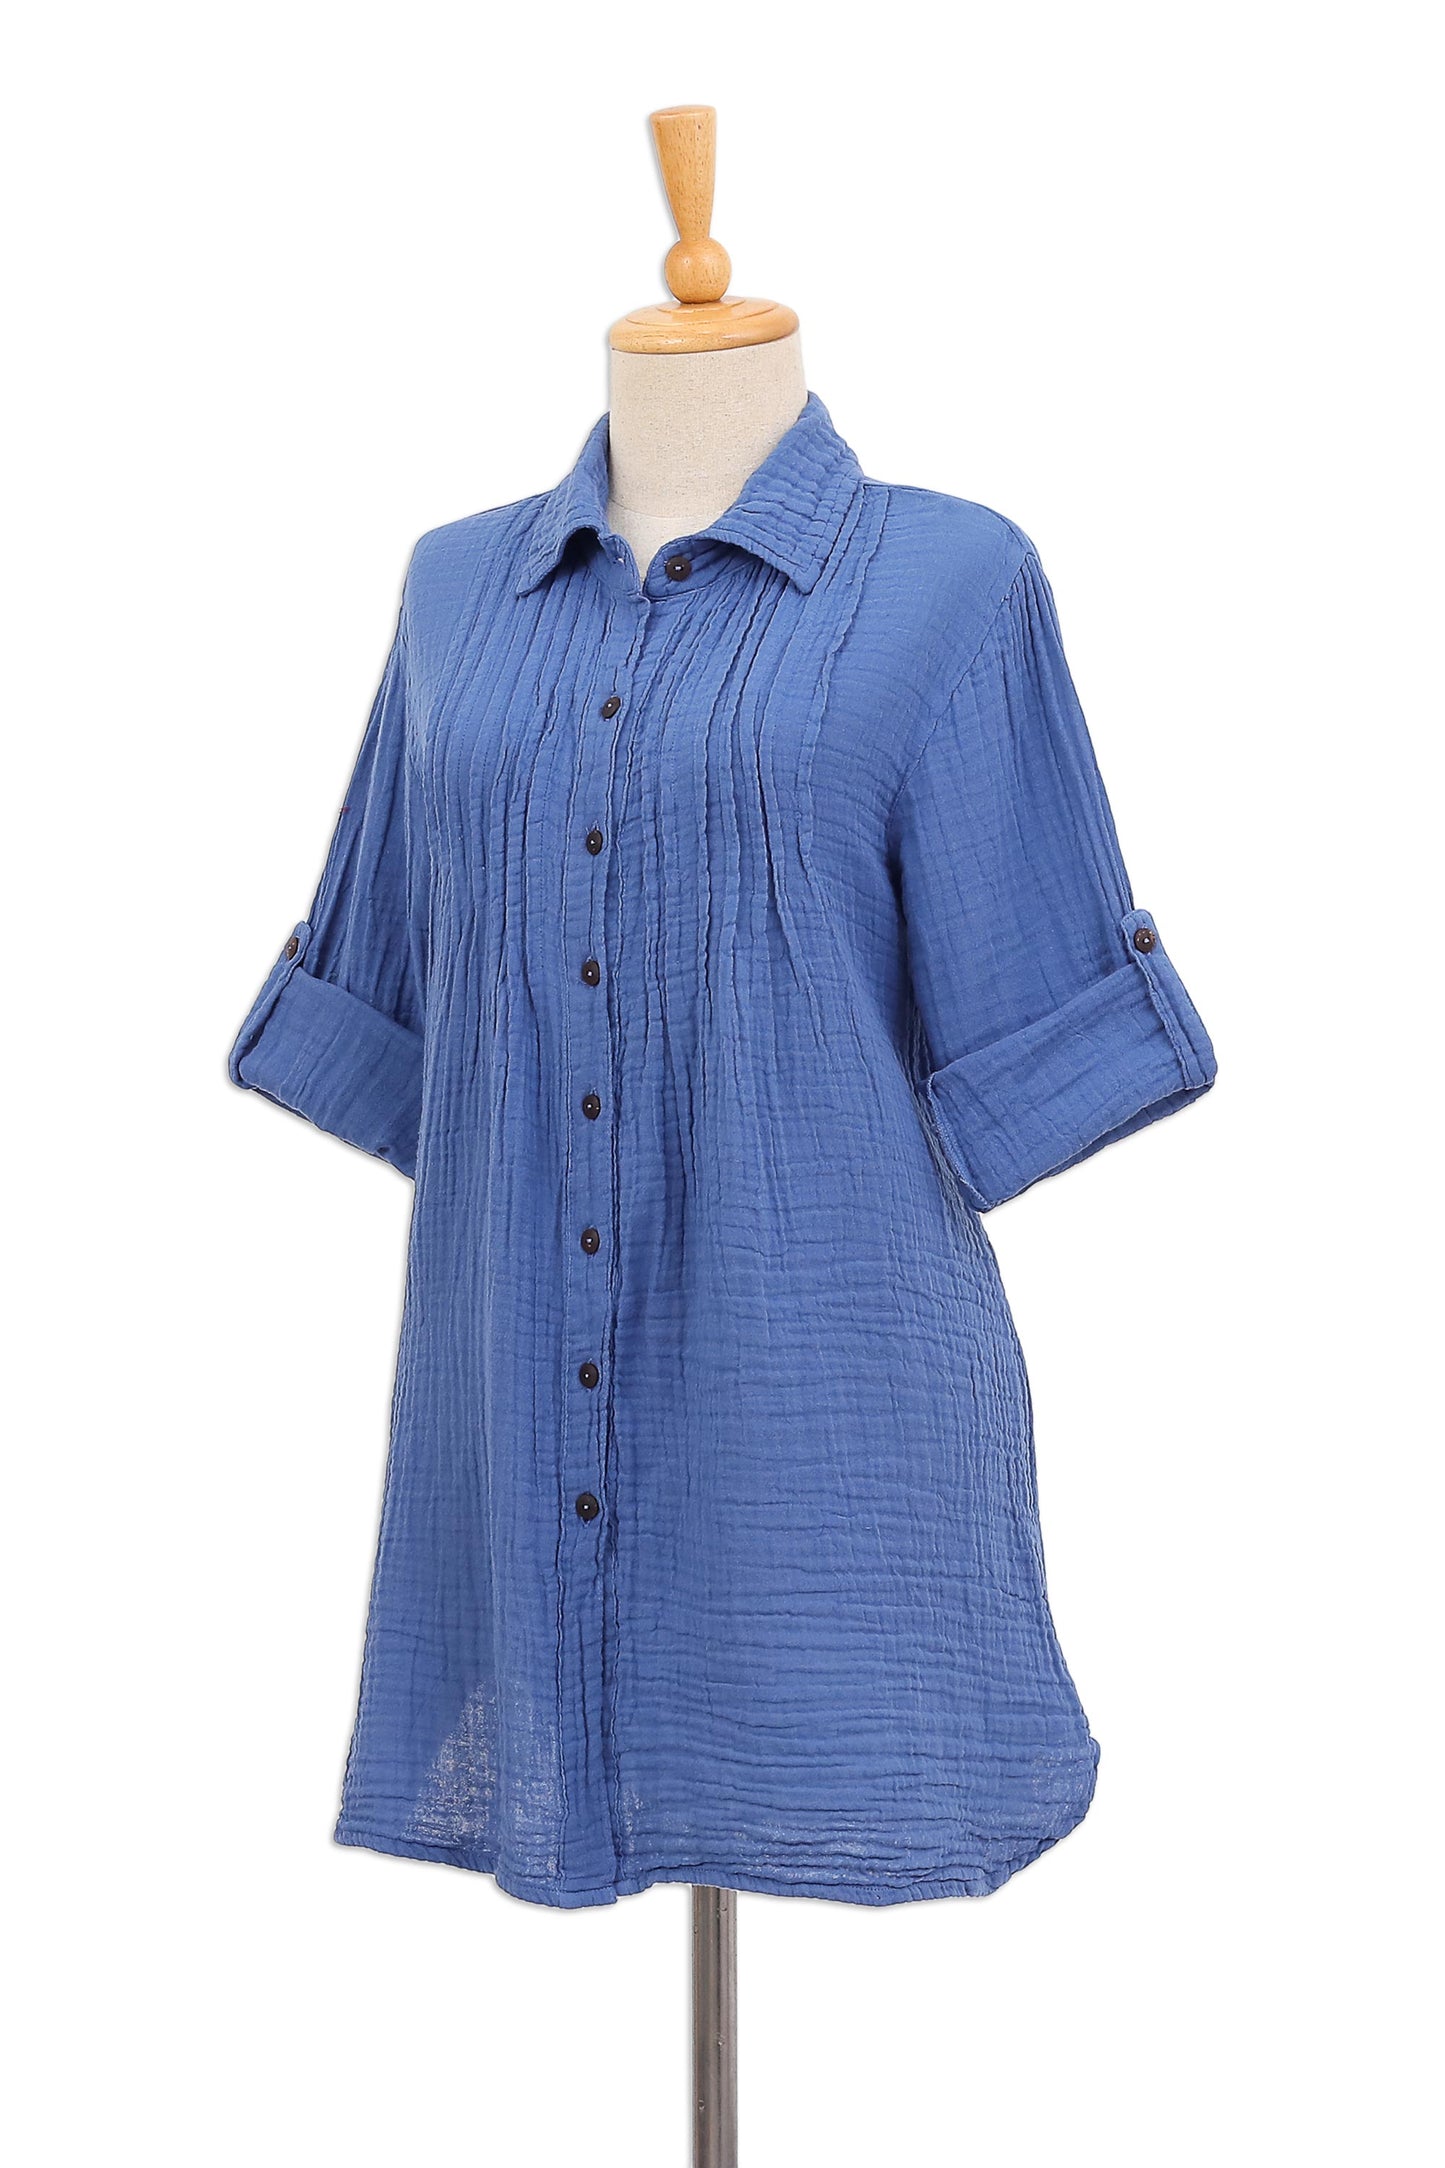 Periwinkle Pintucks Blue Cotton Gauze Shirt from Thailand